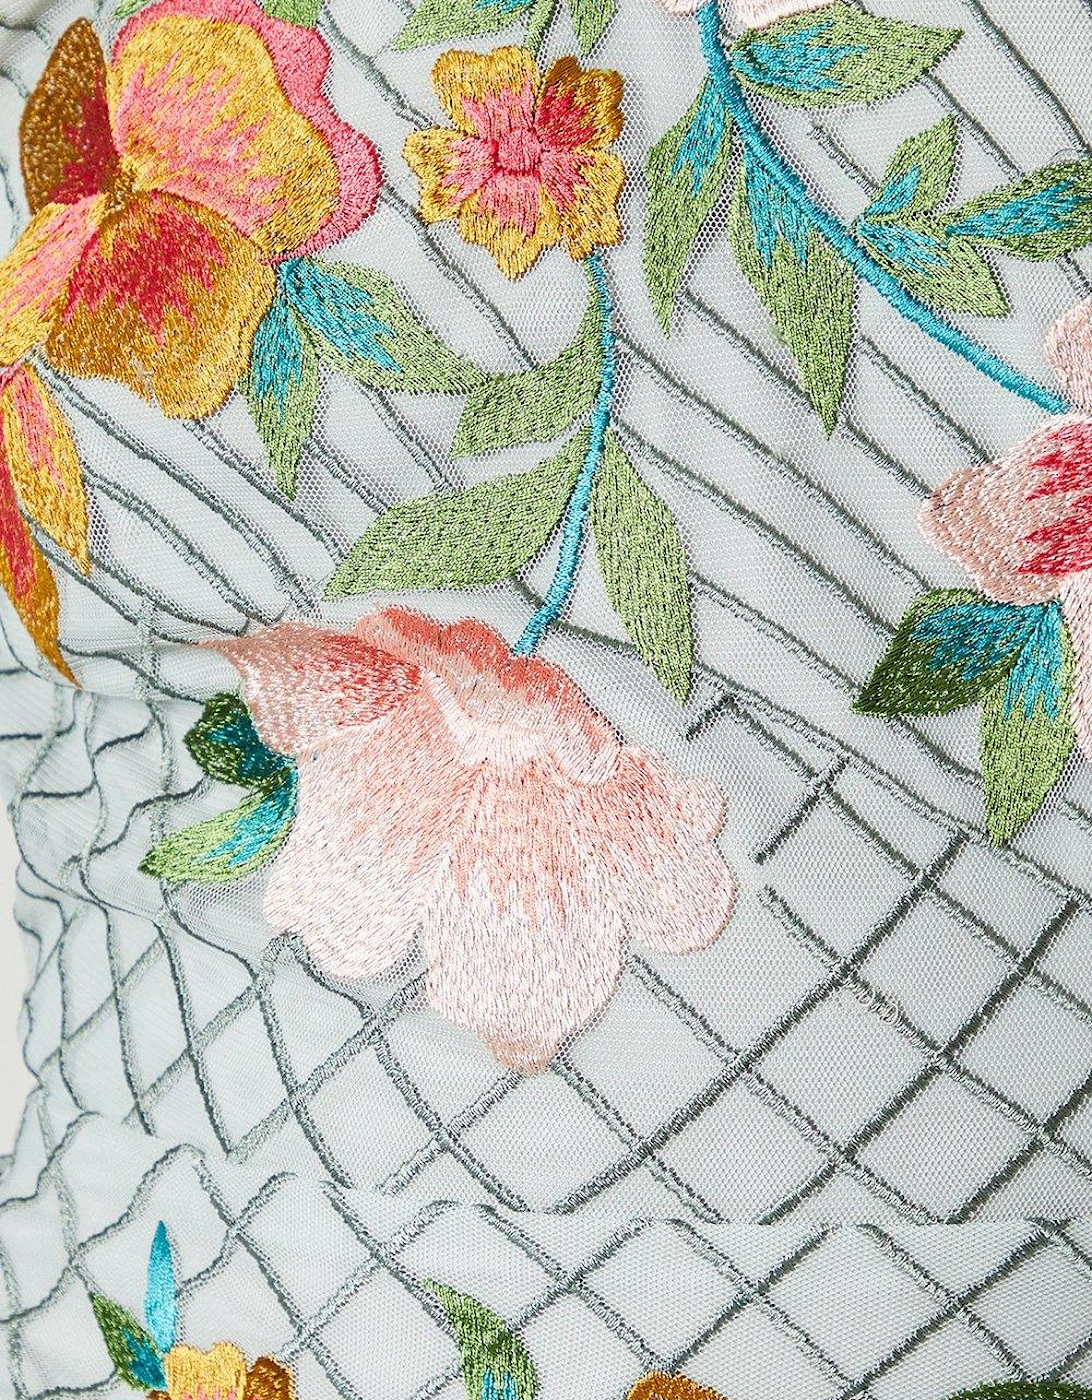 Floral Embroidered 3/4 Sleeve Midi Dress